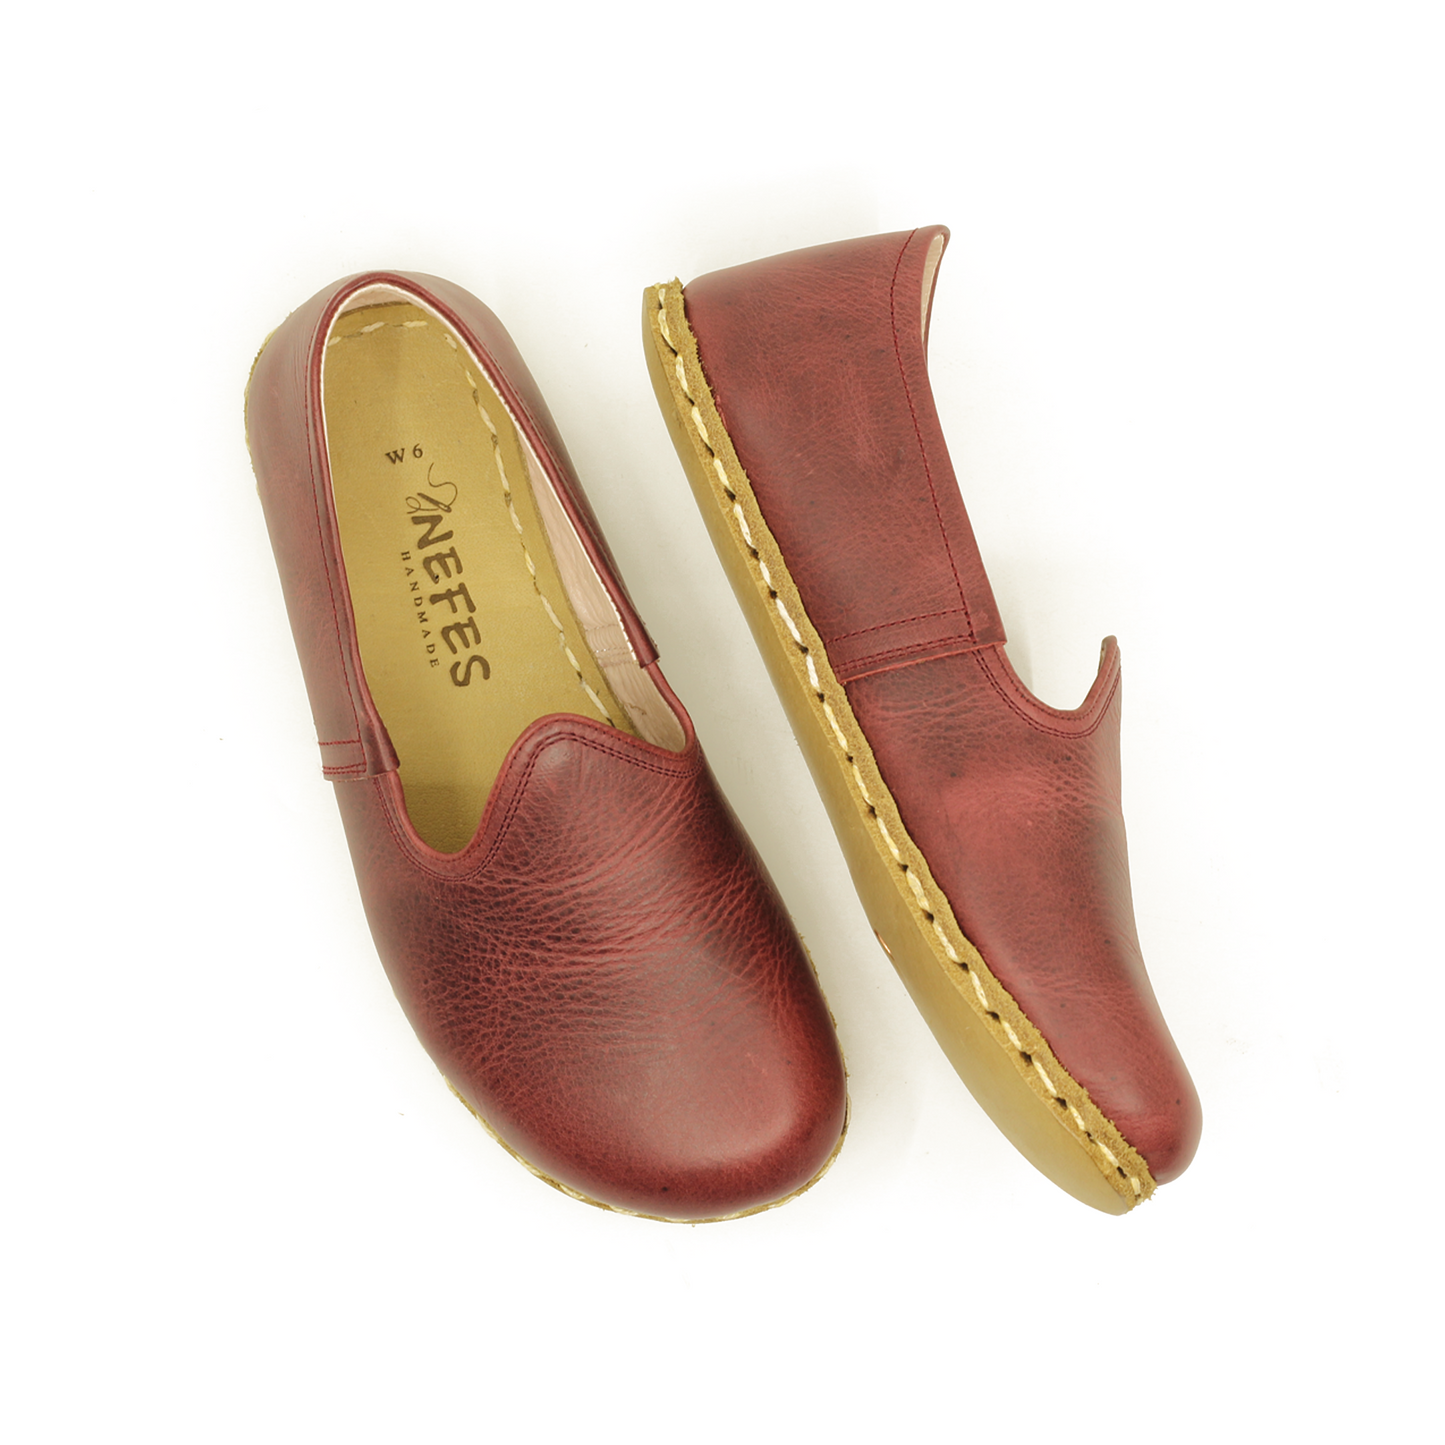 Barefoot Burgundy Leather Shoes: Handmade